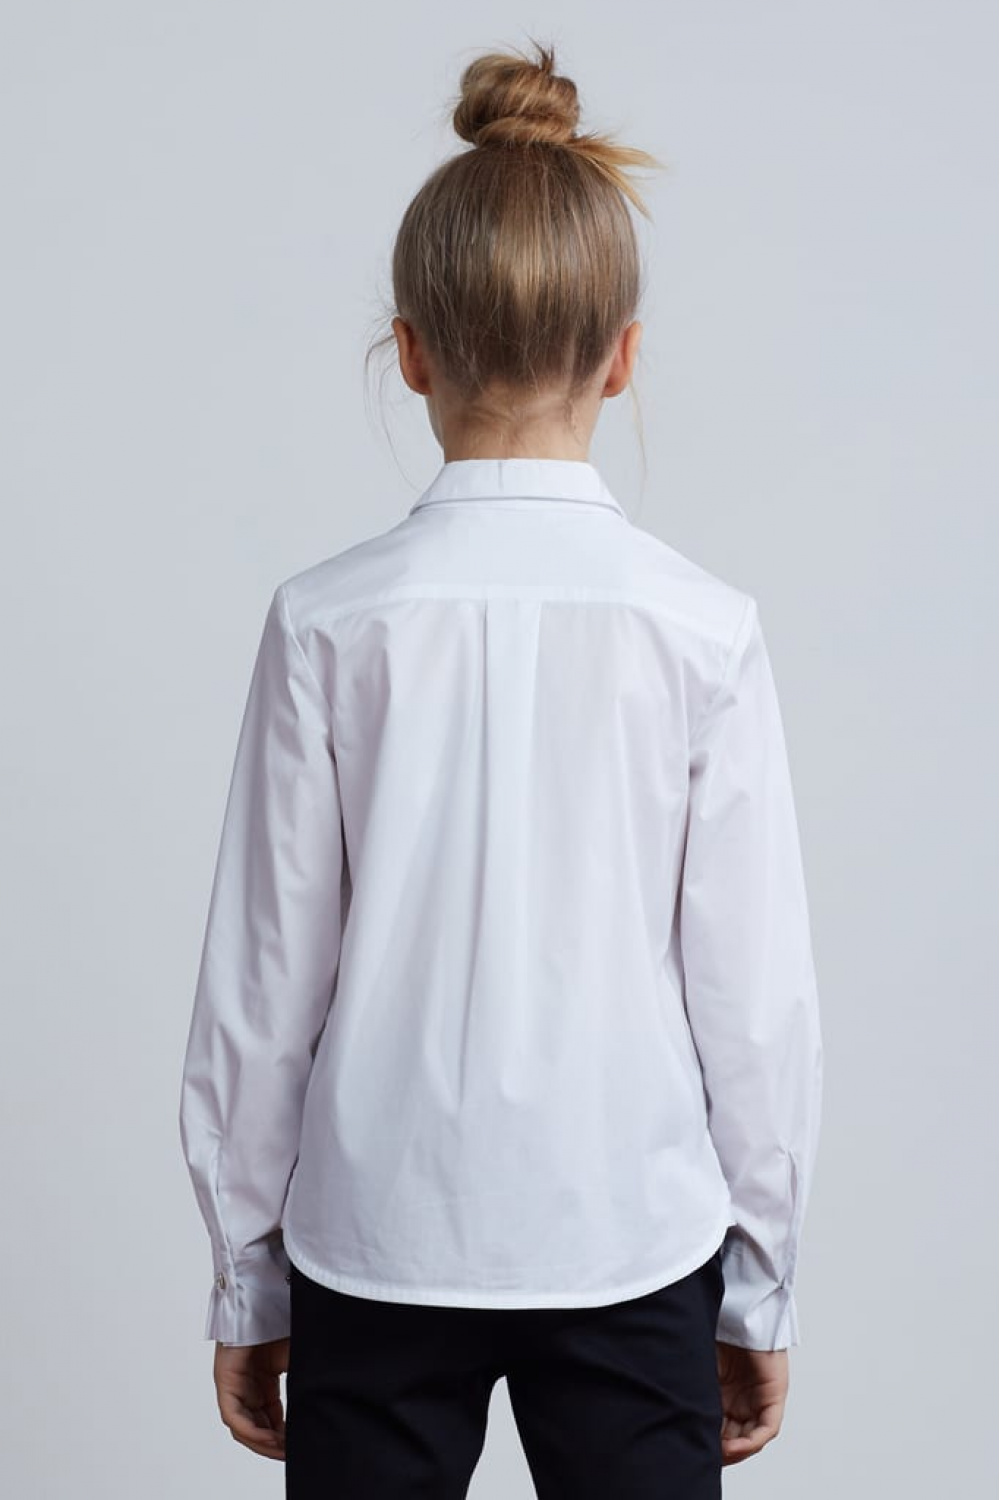 Хлопковая блузка с декоративной вставкой (SSFSG-929-23004-200) Silver spoon